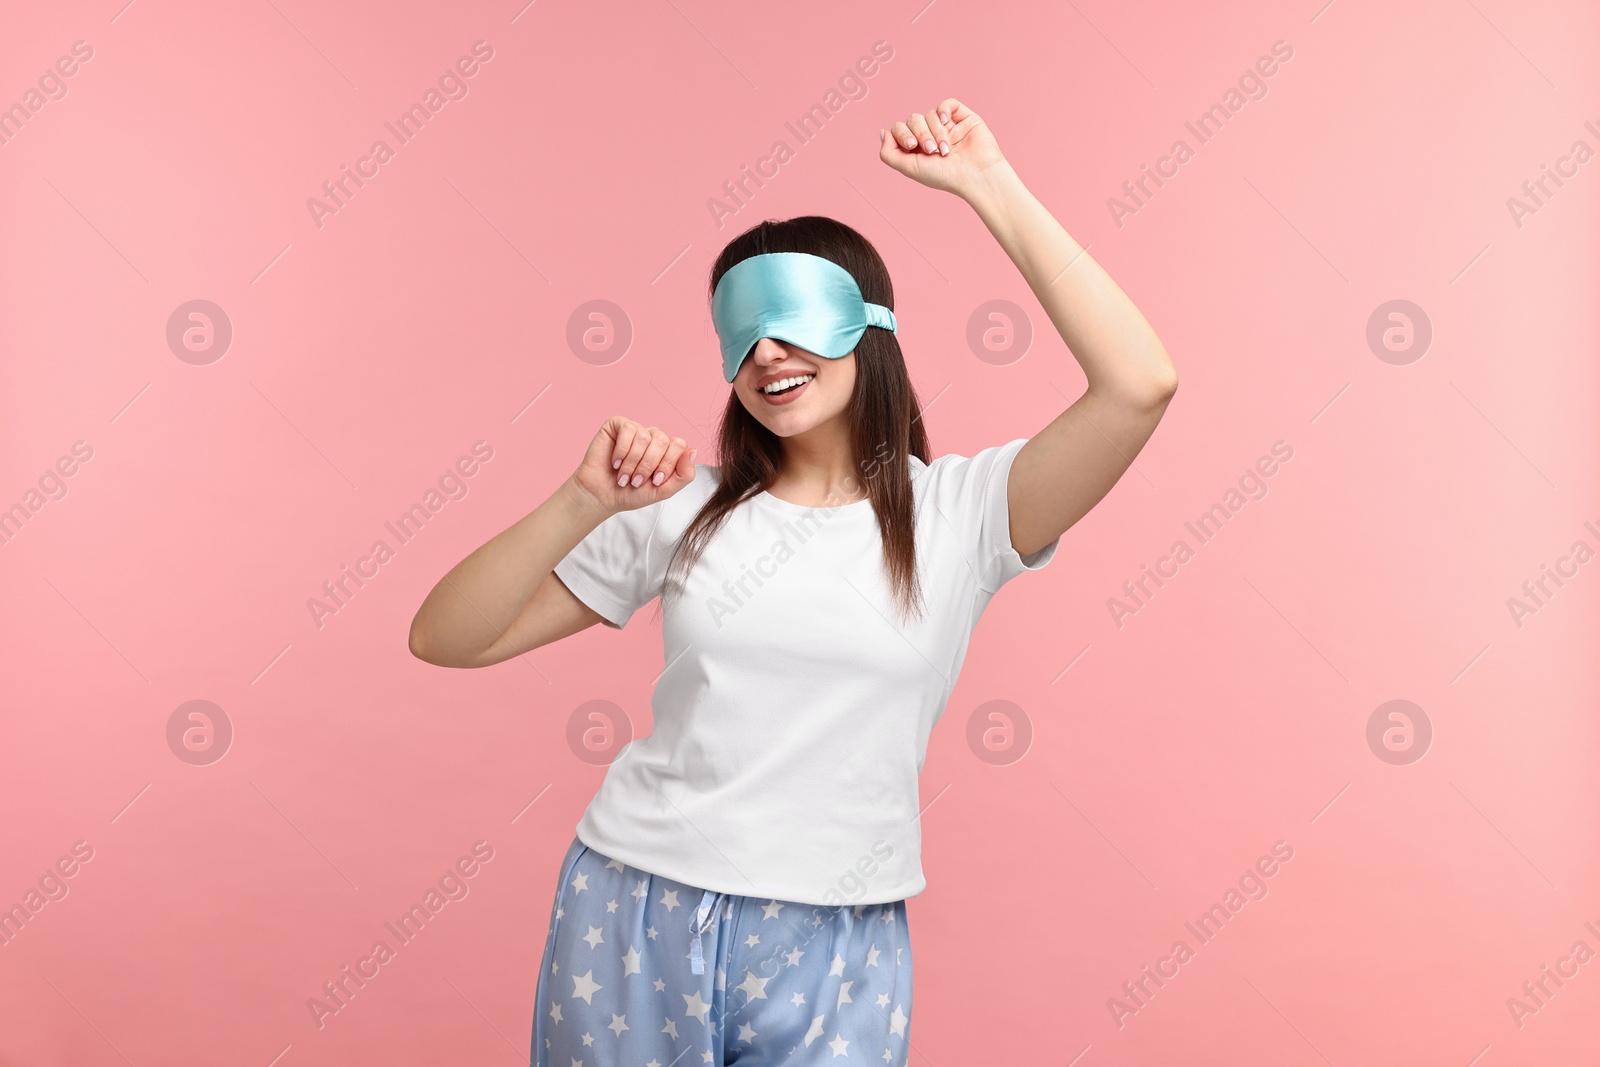 Photo of Happy woman in pyjama and sleep mask on pink background